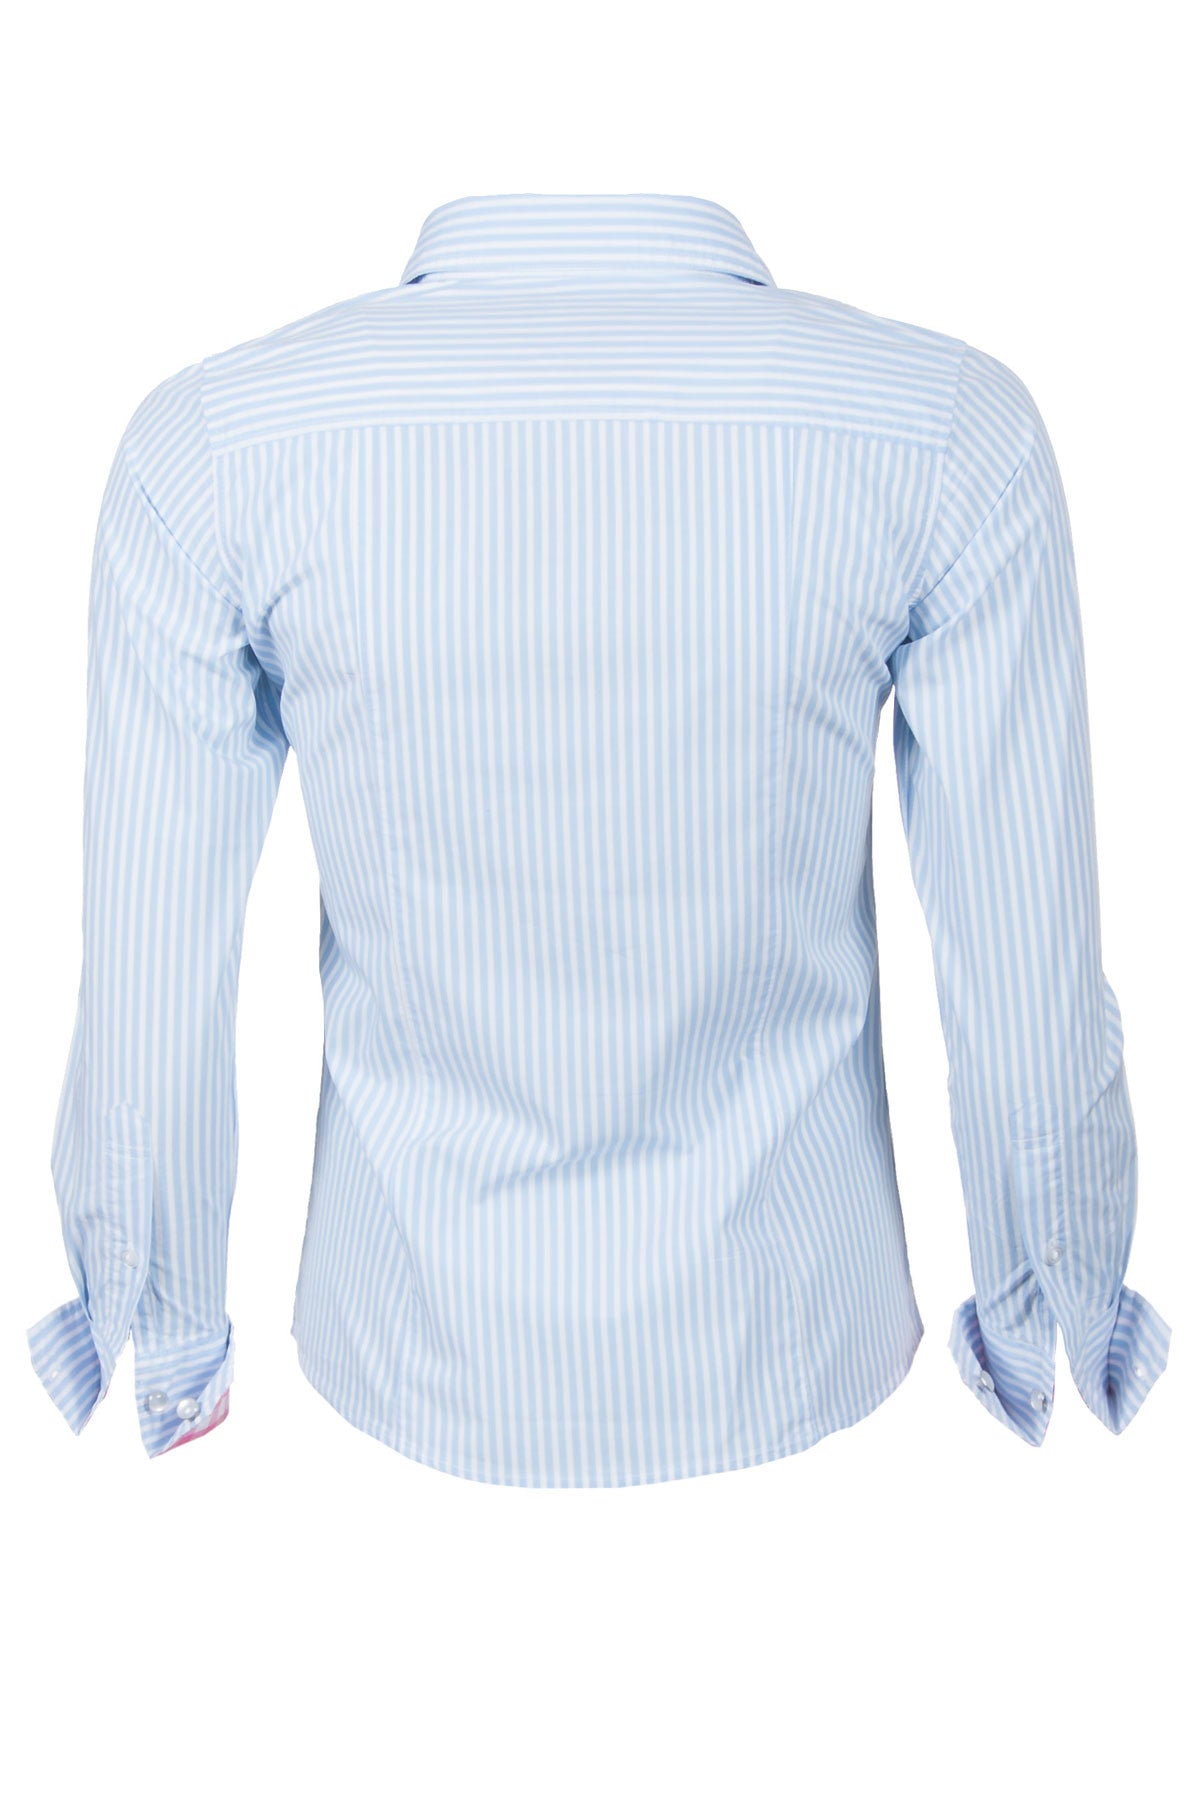 Classic 100% Cotton Oxford Dress Shirts UK | Rydale